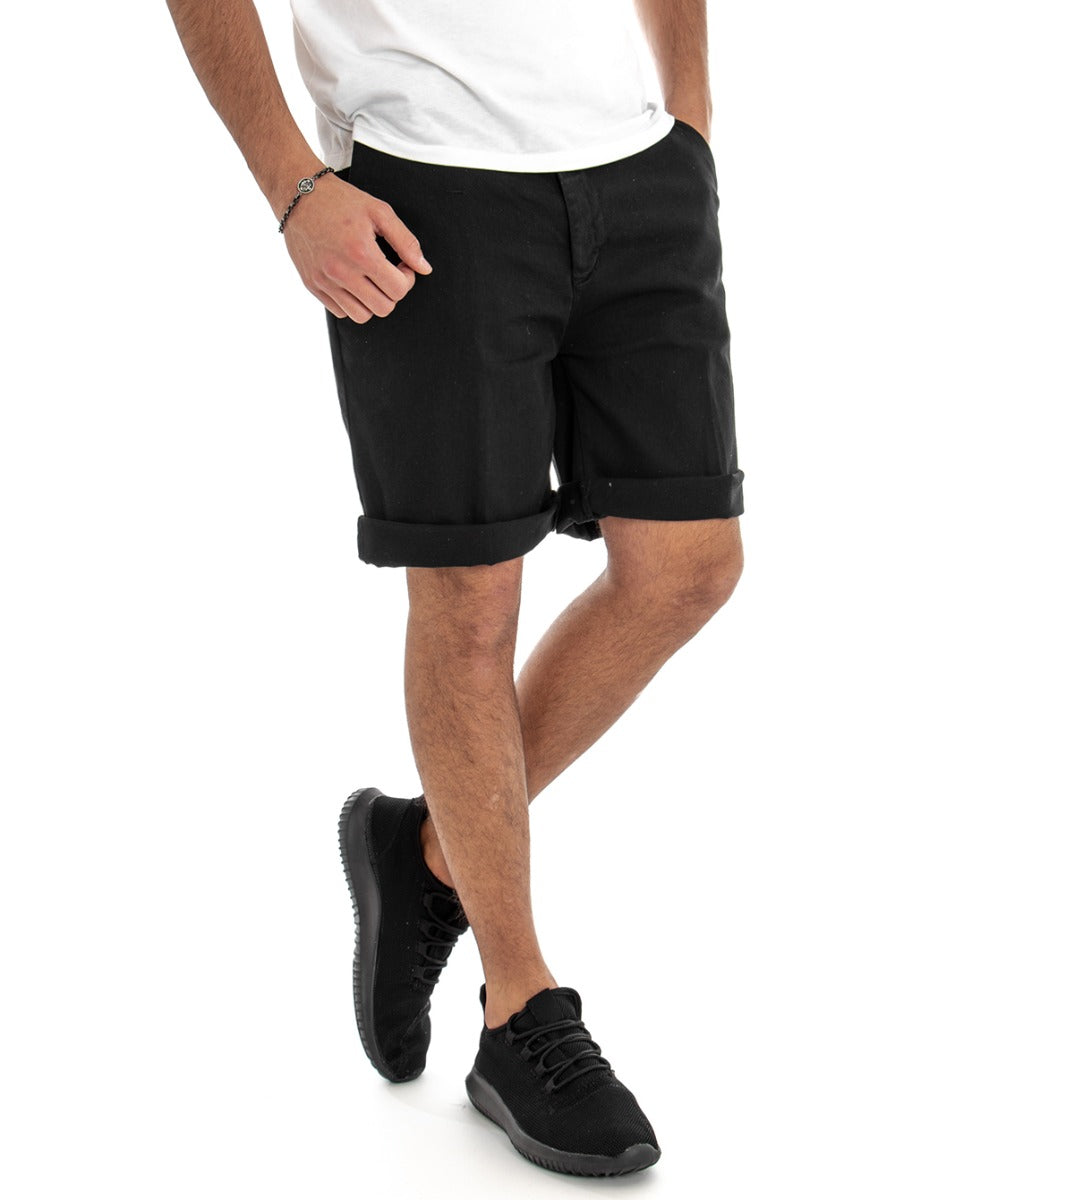 Bermuda Short Men's Cotton America Pocket Shorts Black GIOSAL-PC1378A